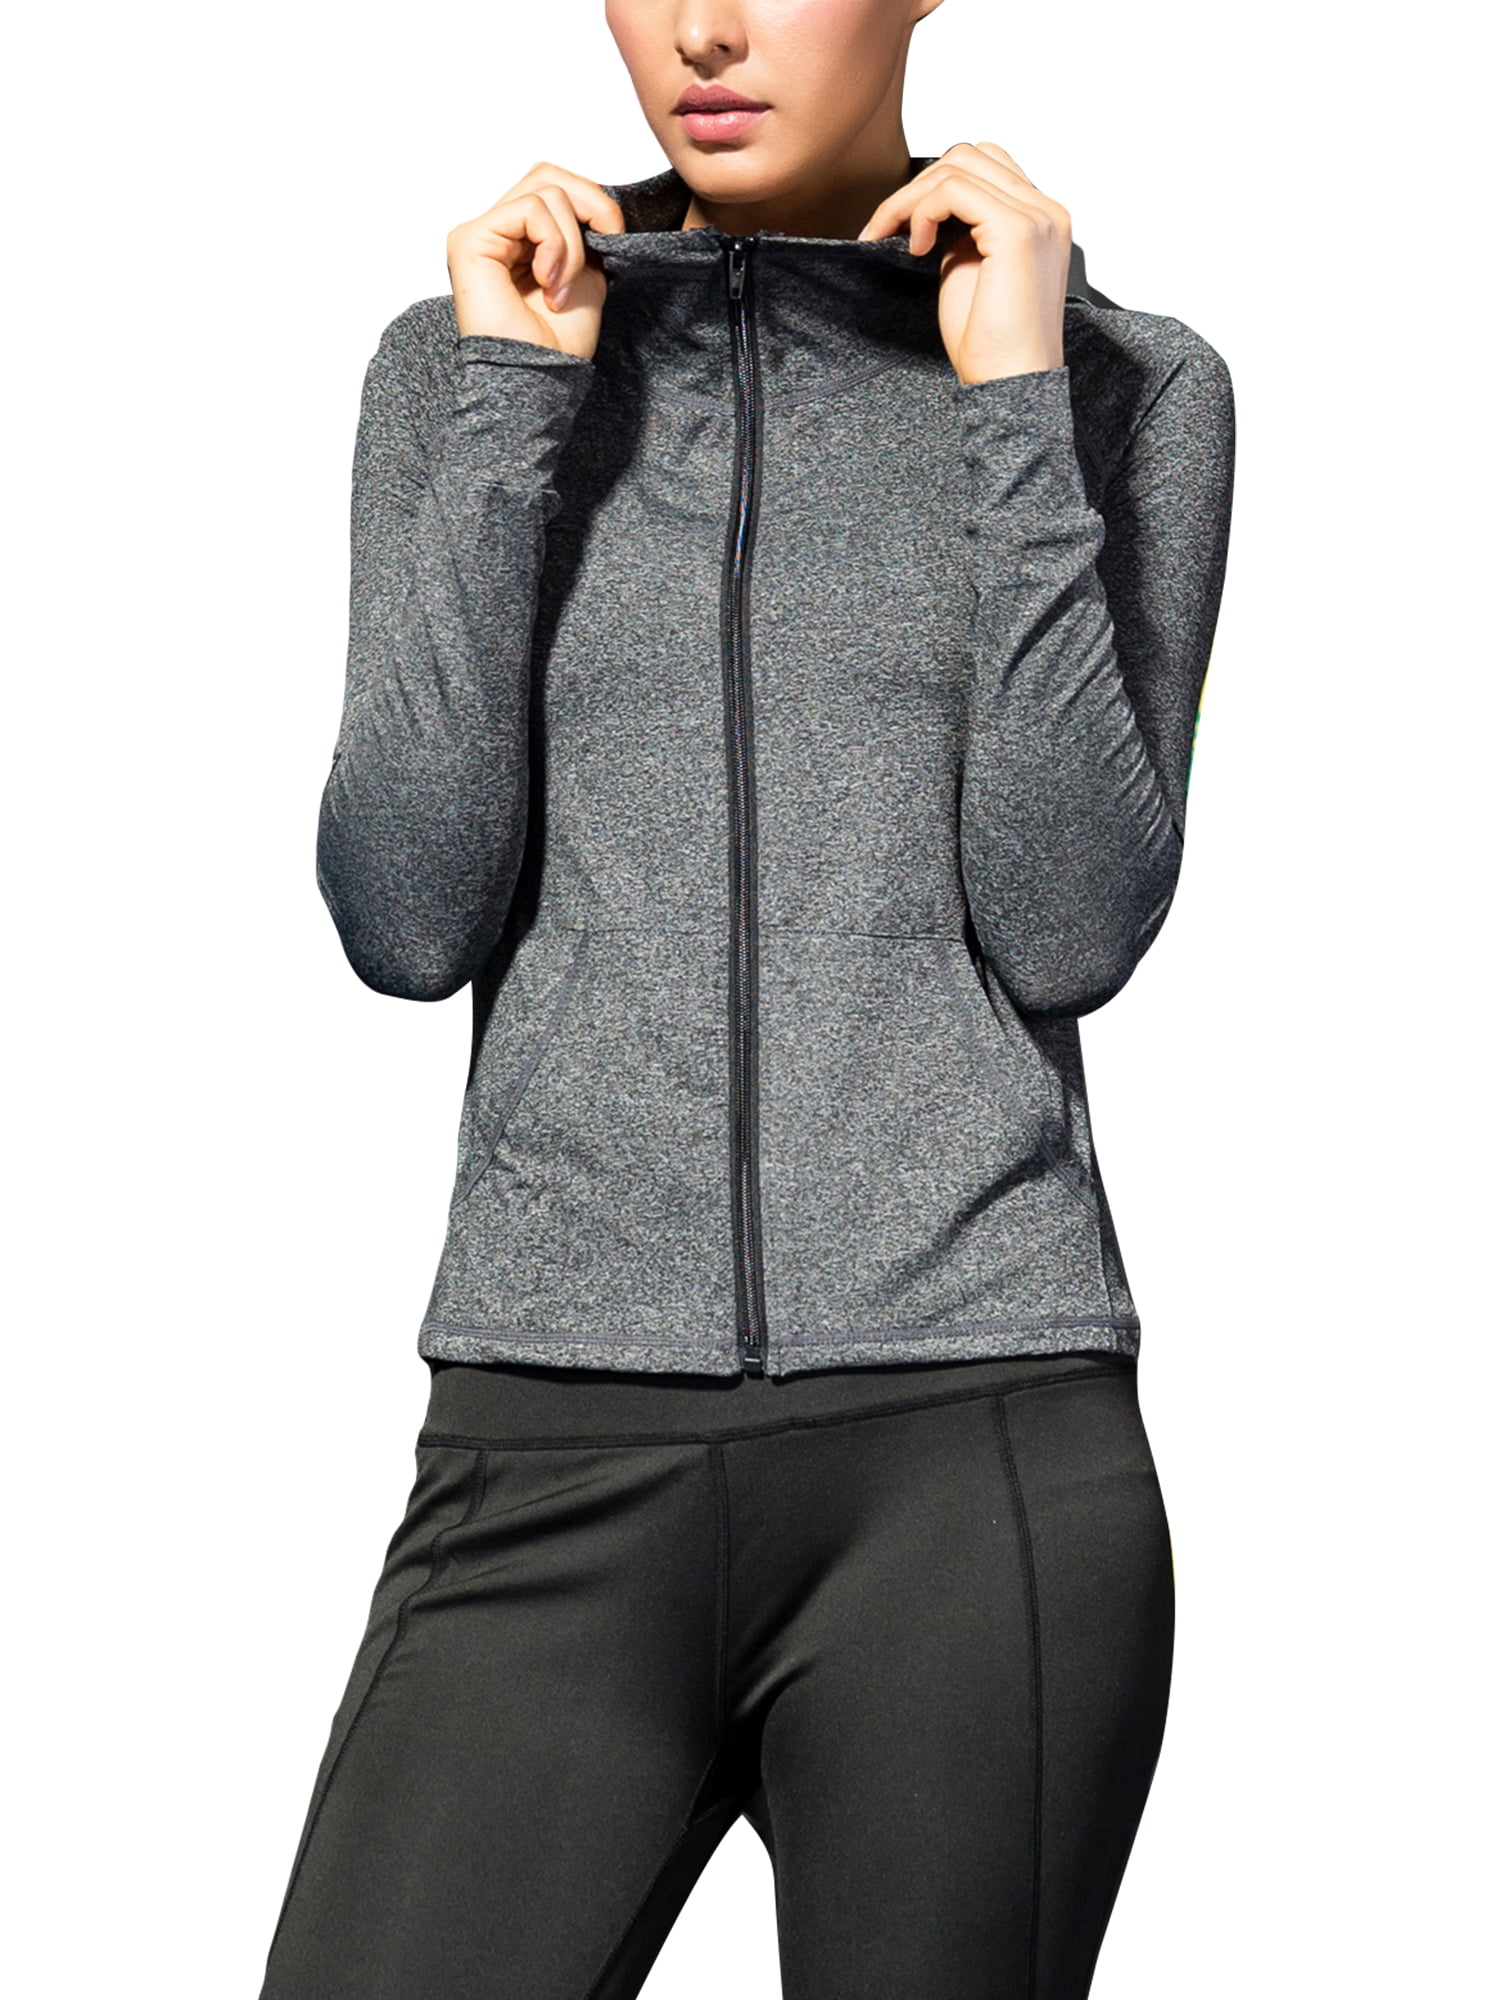 Women Sports Hooded Casual Long Sleeve Zipper Pocket Running Jacket Tops Coat